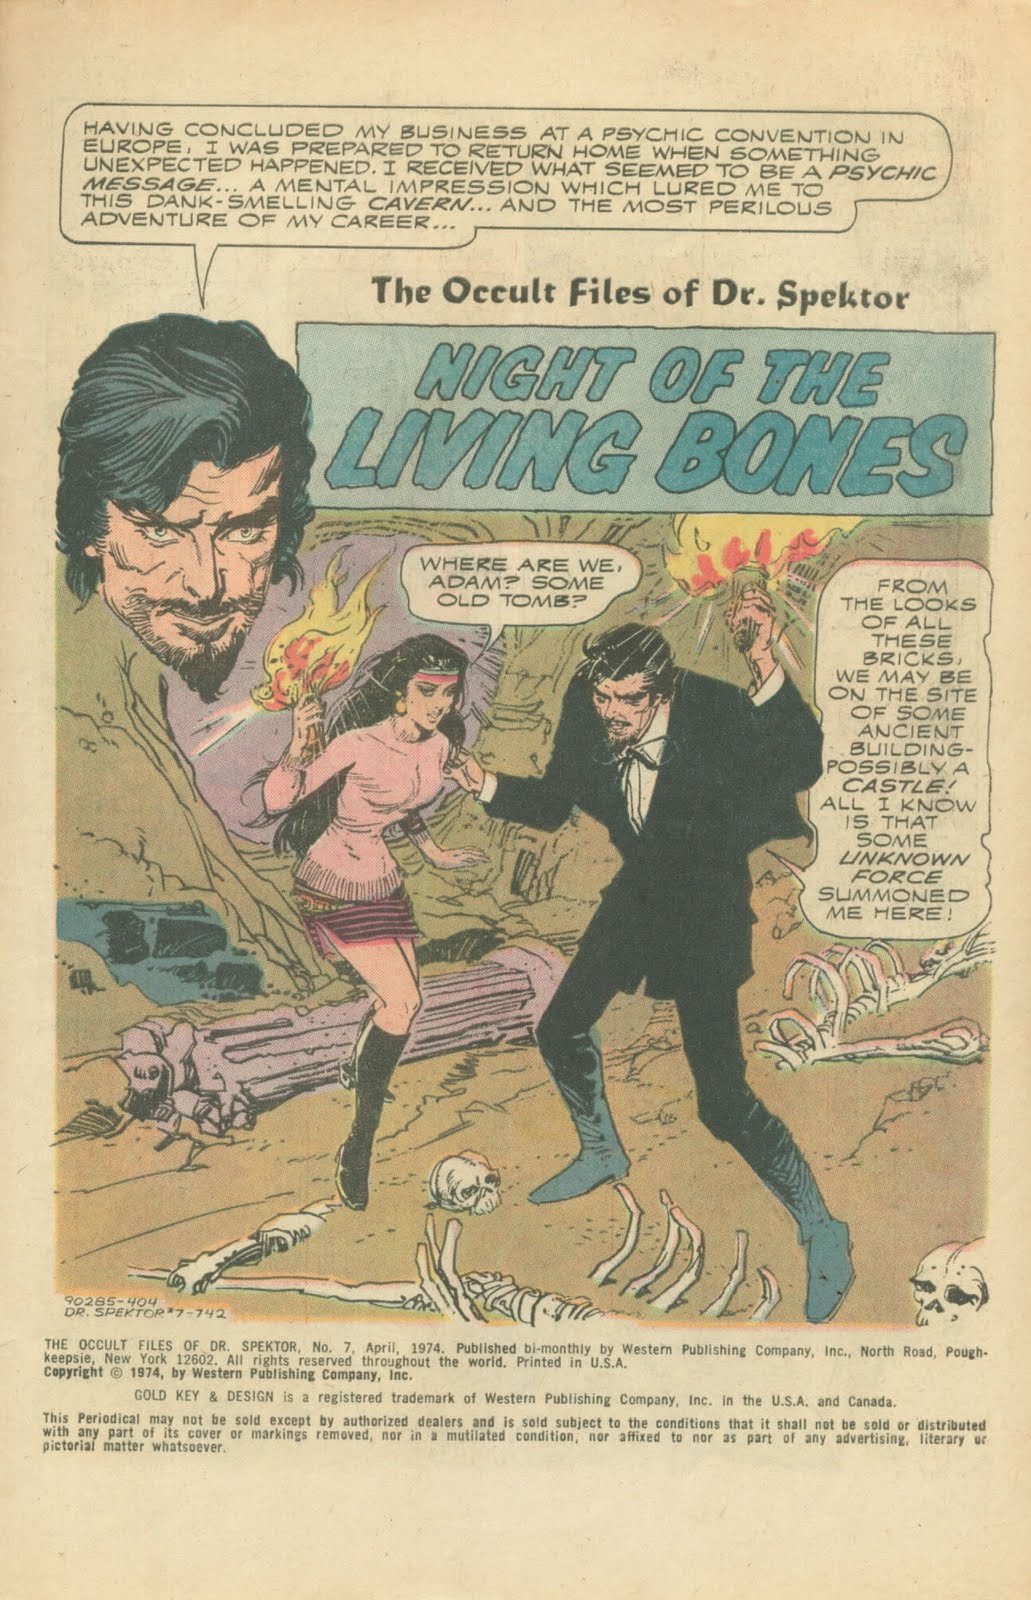 Doctor Spektor Pics, Comics Collection